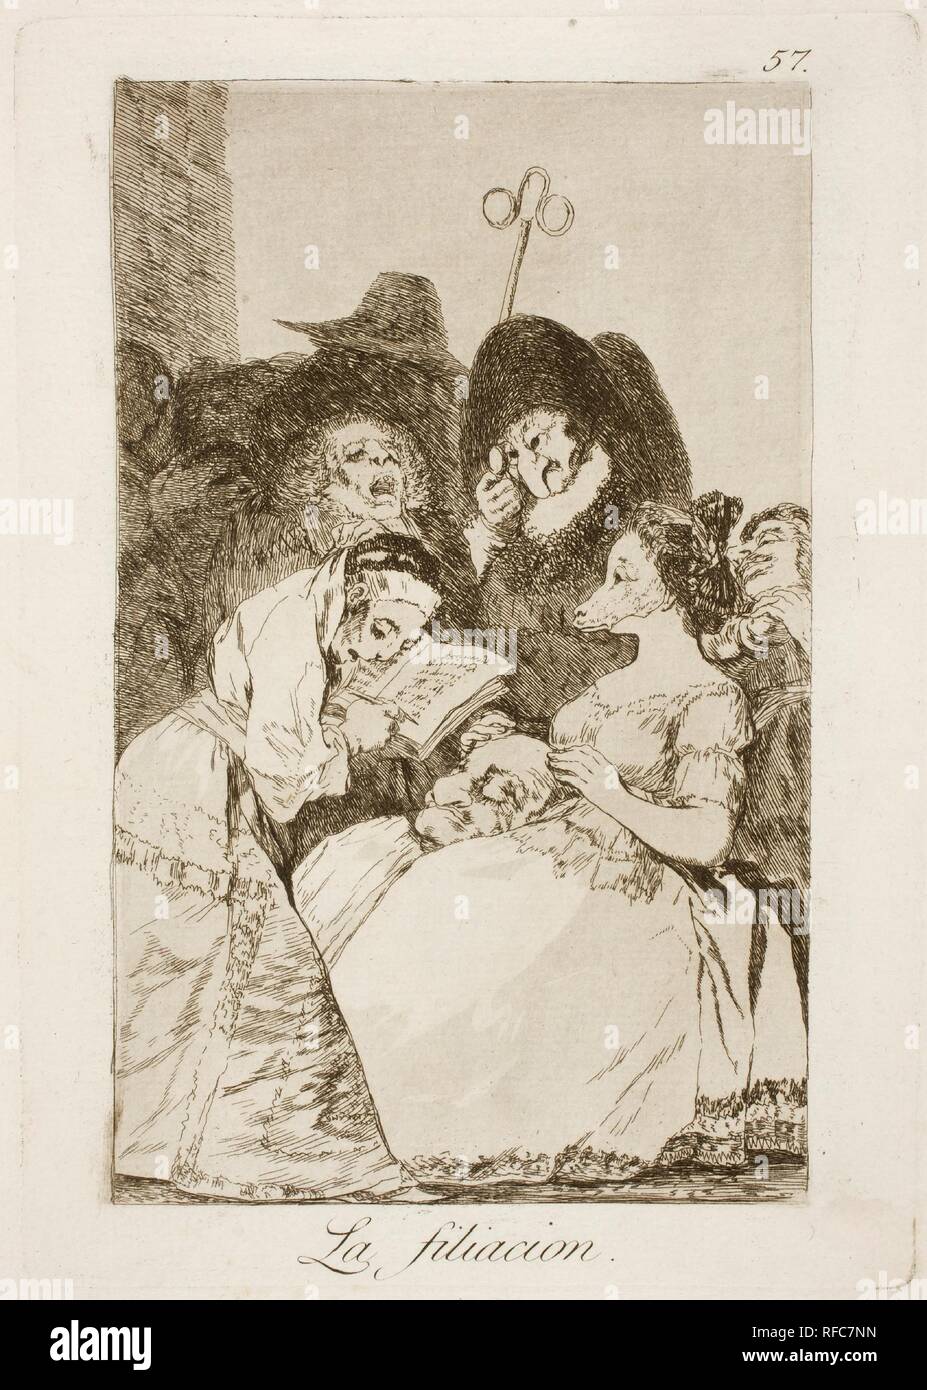 Francisco de Goya y Lucientes/' die Kindschaft". 1797 - 1799. Radierung, Aquatinta auf Elfenbein Bütten. Museum: Museo del Prado, Madrid, España. Stockfoto